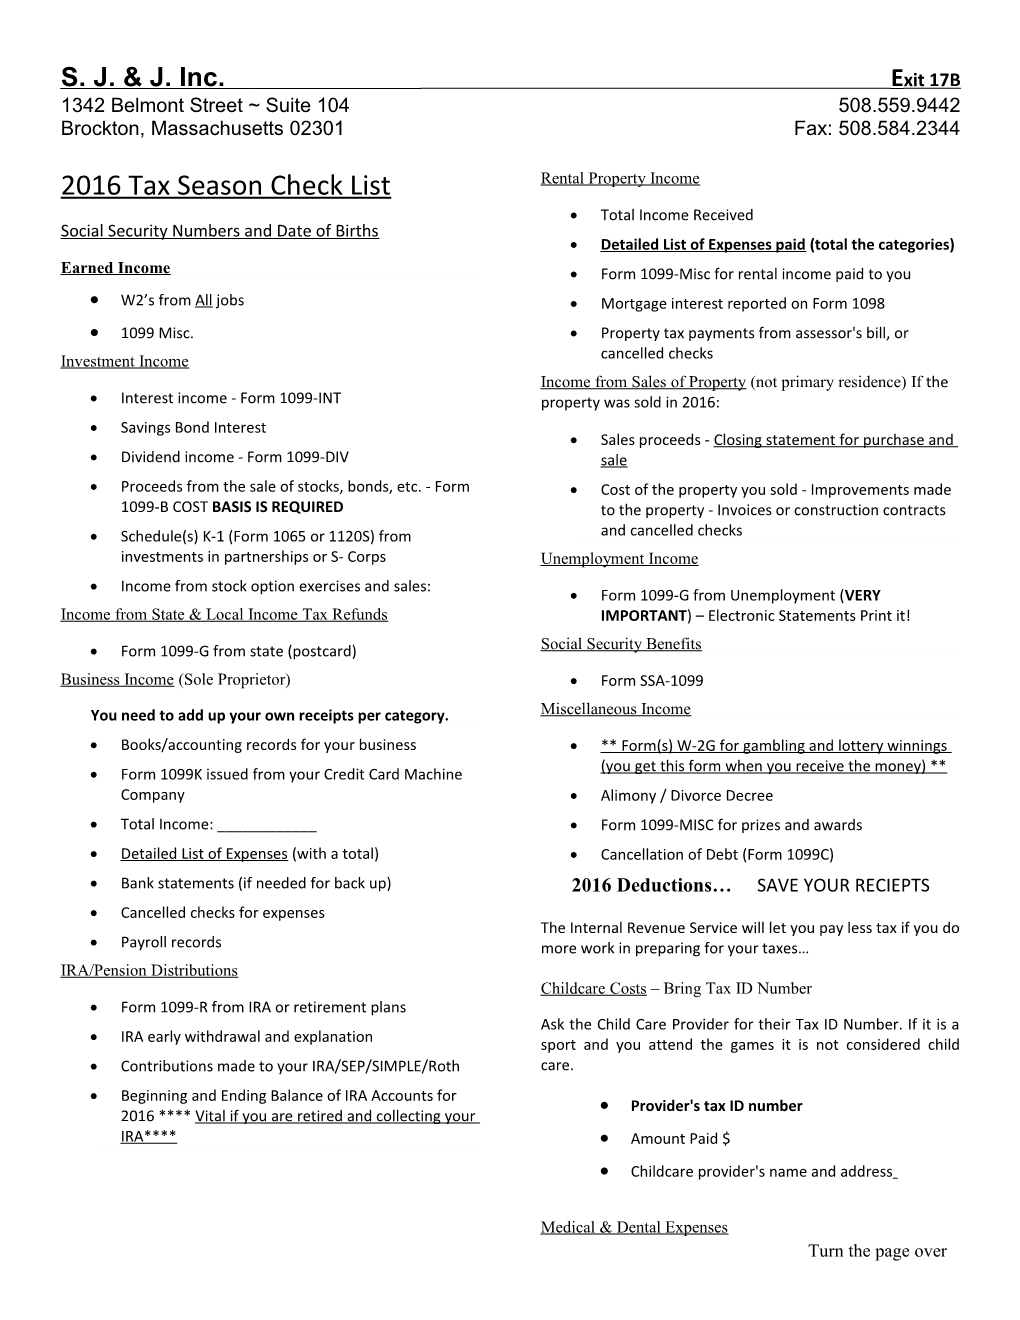 2009 Tax Season Check List